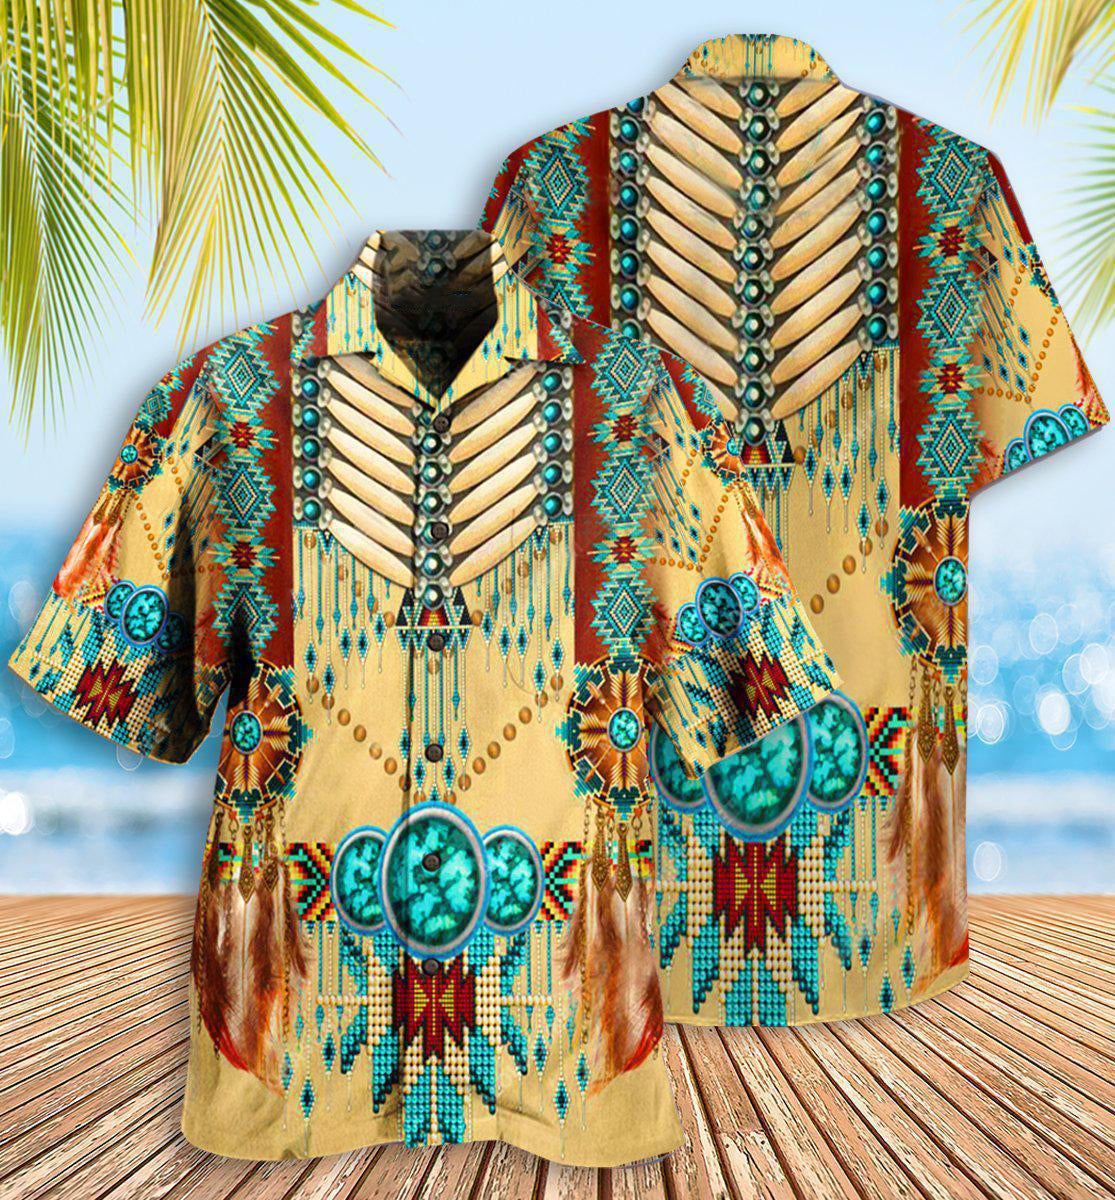 Native American Proud Pattern - Hawaiian Shirt - Owls Matrix LTD